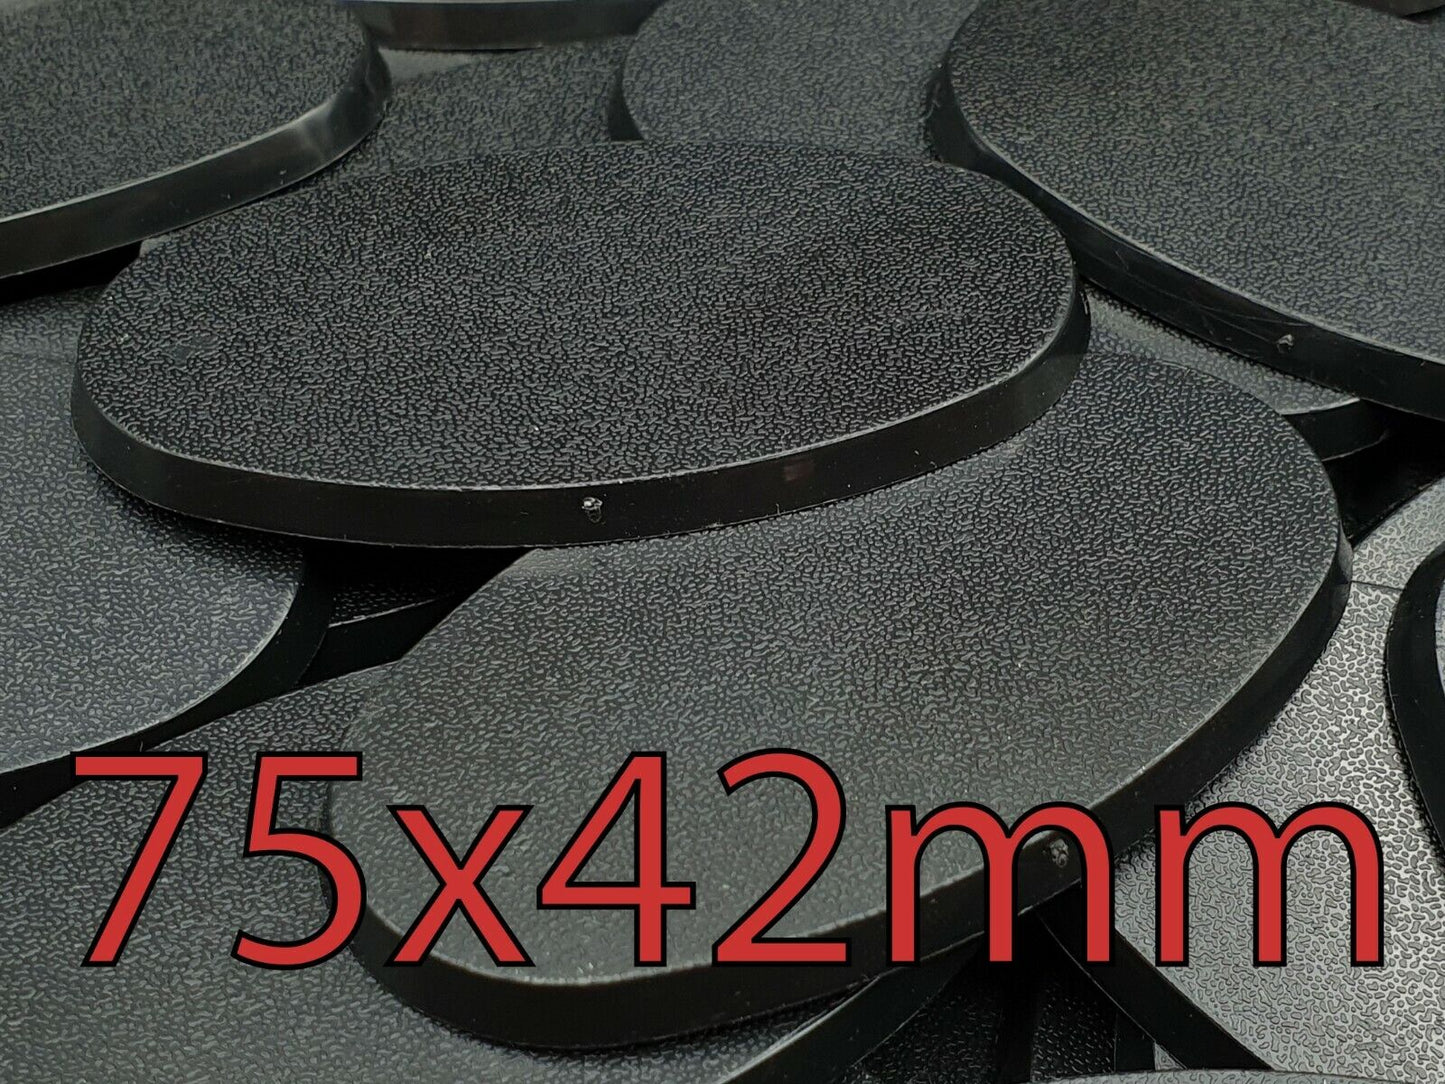 75mmx42mm Round Plastic Base (Multibuy Discounts)